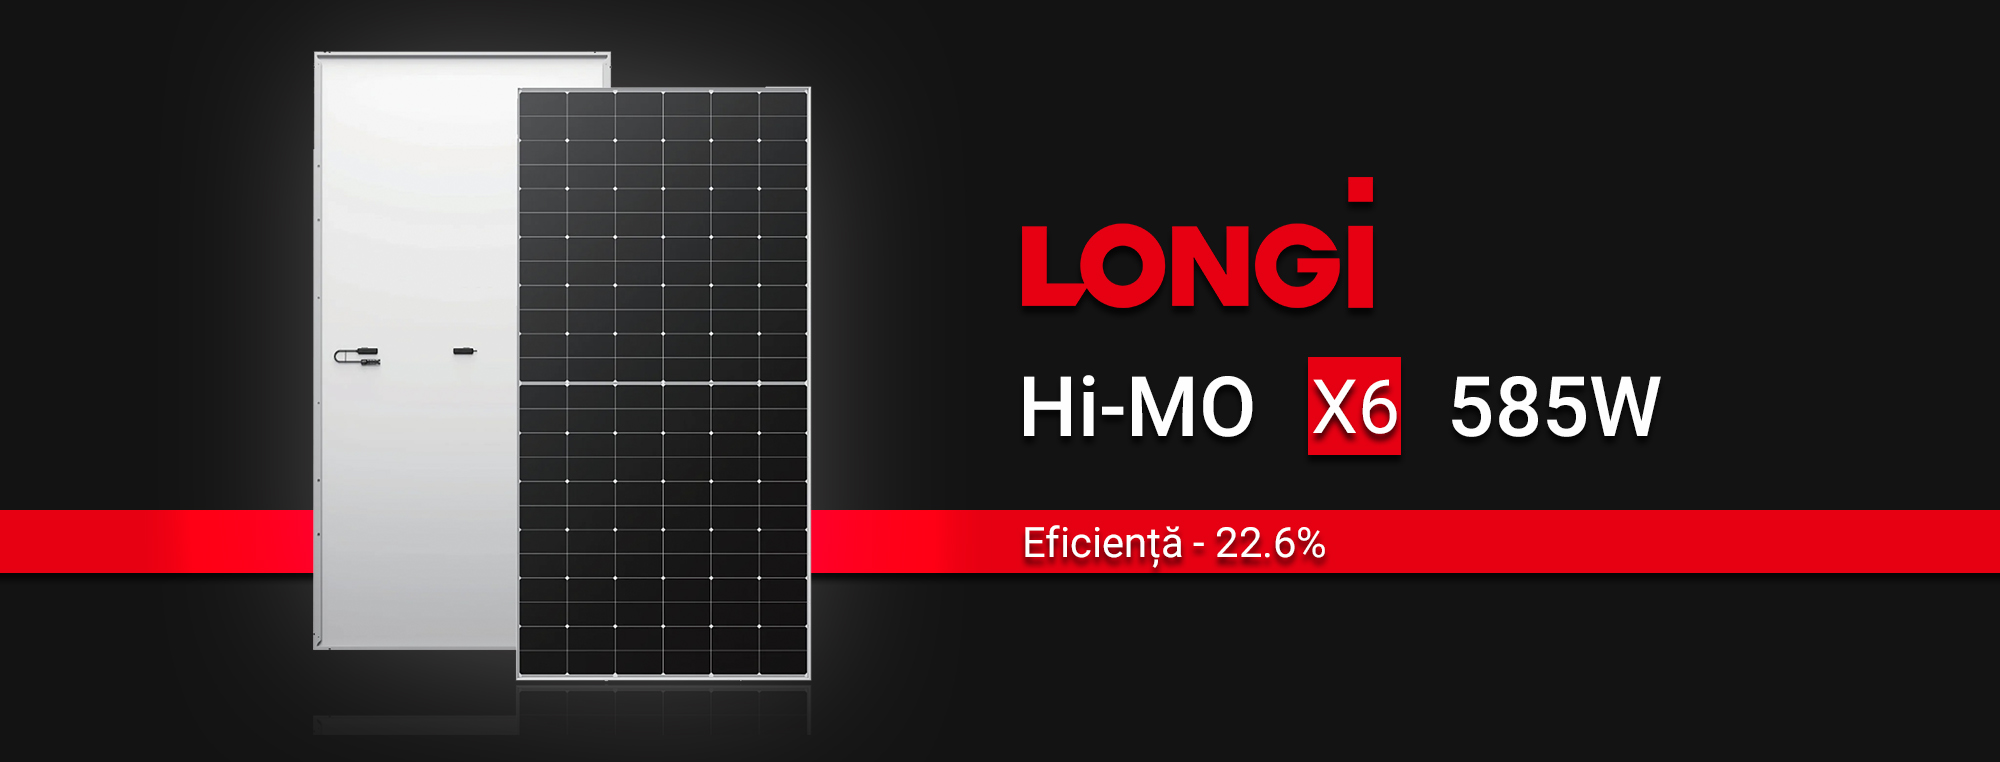 Panou fotovoltaic Longi Hi-MO X6 585W